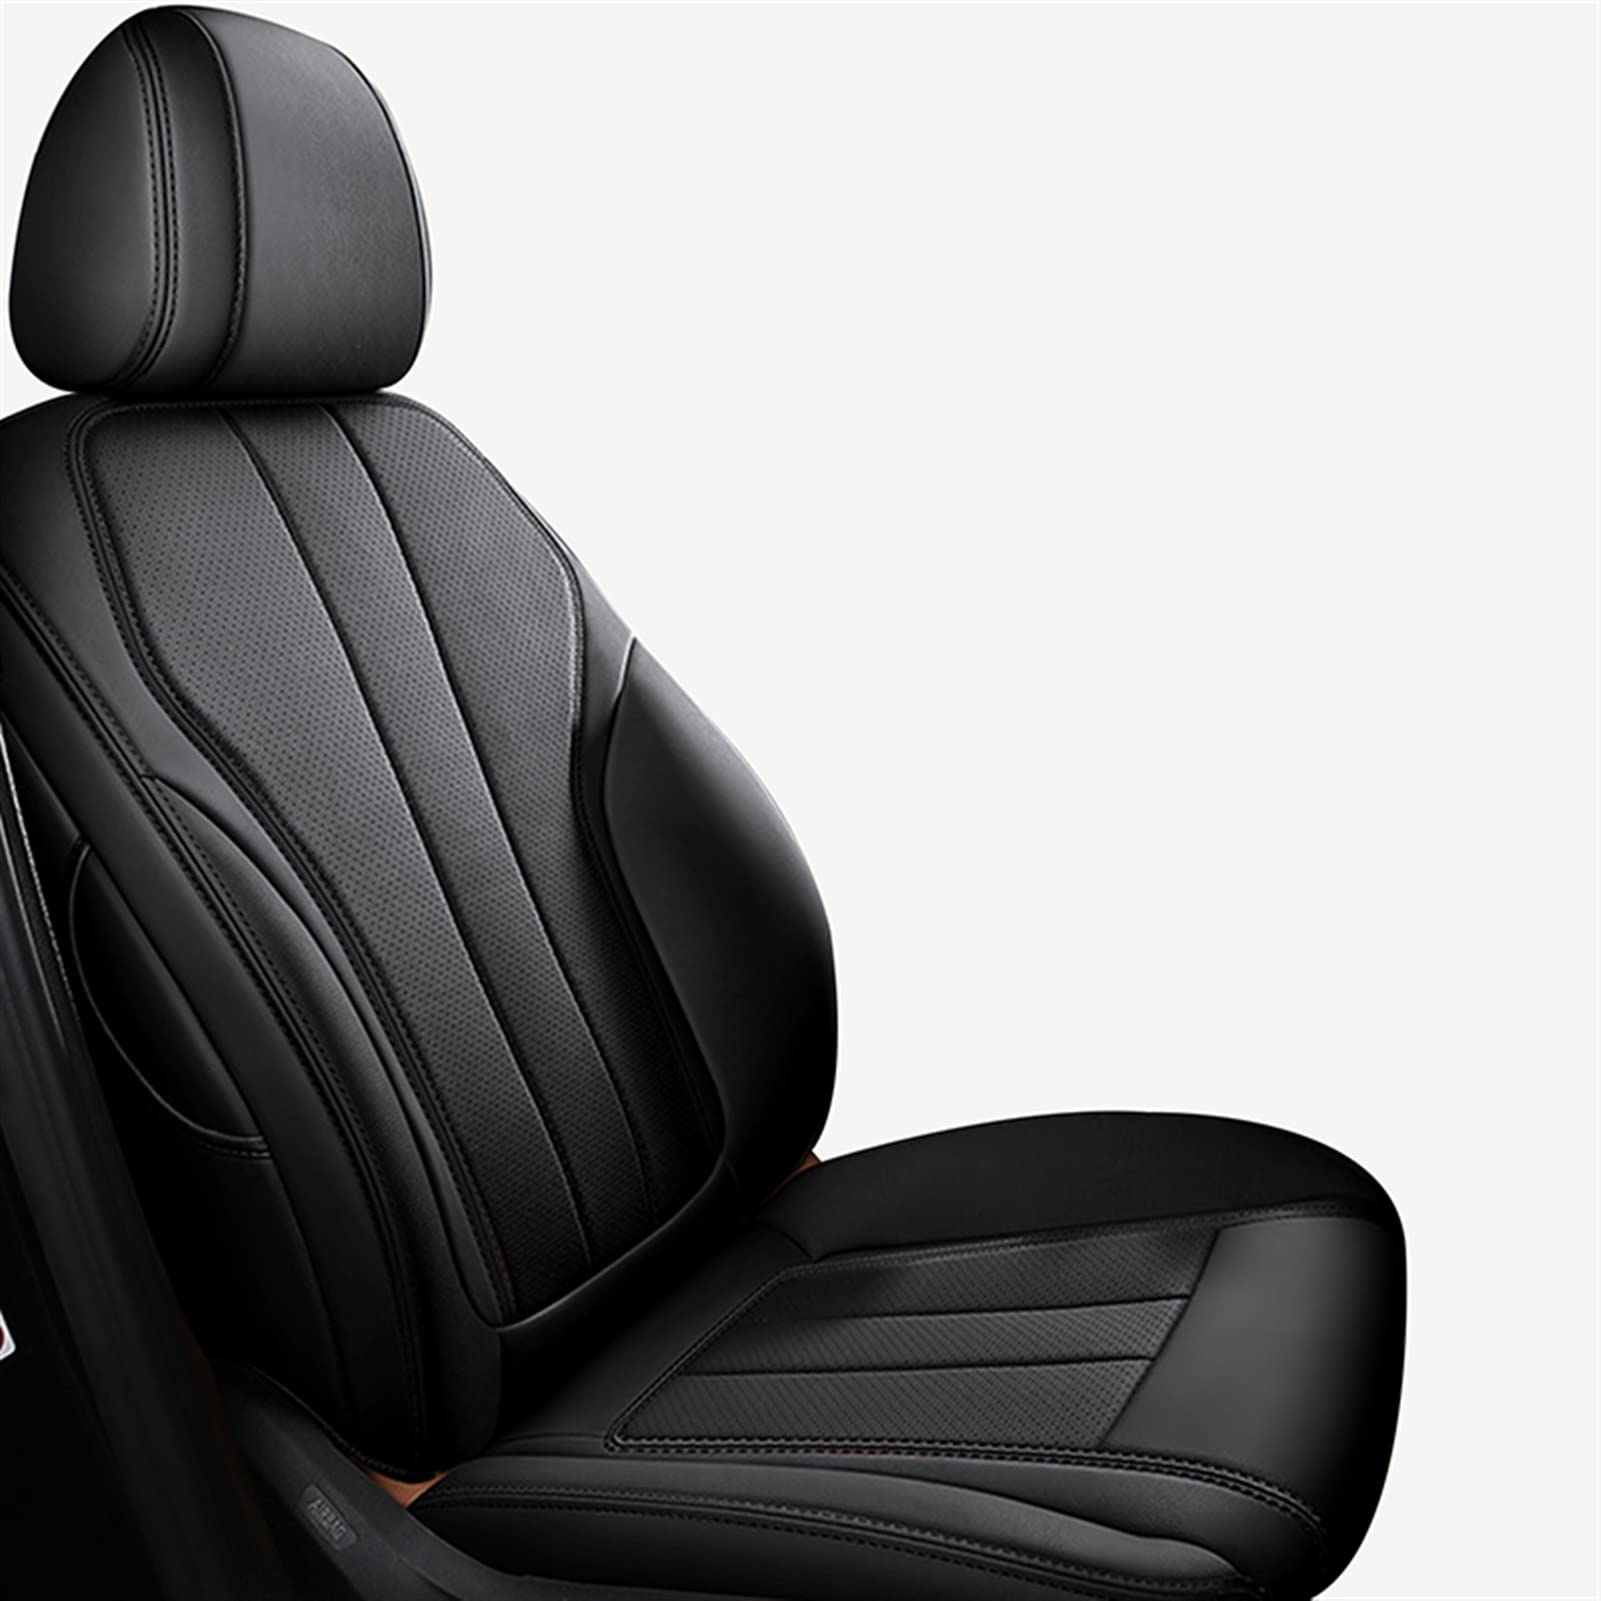 TATARENGS Automobilinnenraum Kompatibel Mit Ford Für Explorer 2020 2013 2014 2016 2017 Auto-Innenraum-Fahrersitzbezug Sitzbezug-Schutz(3) von TATARENGS